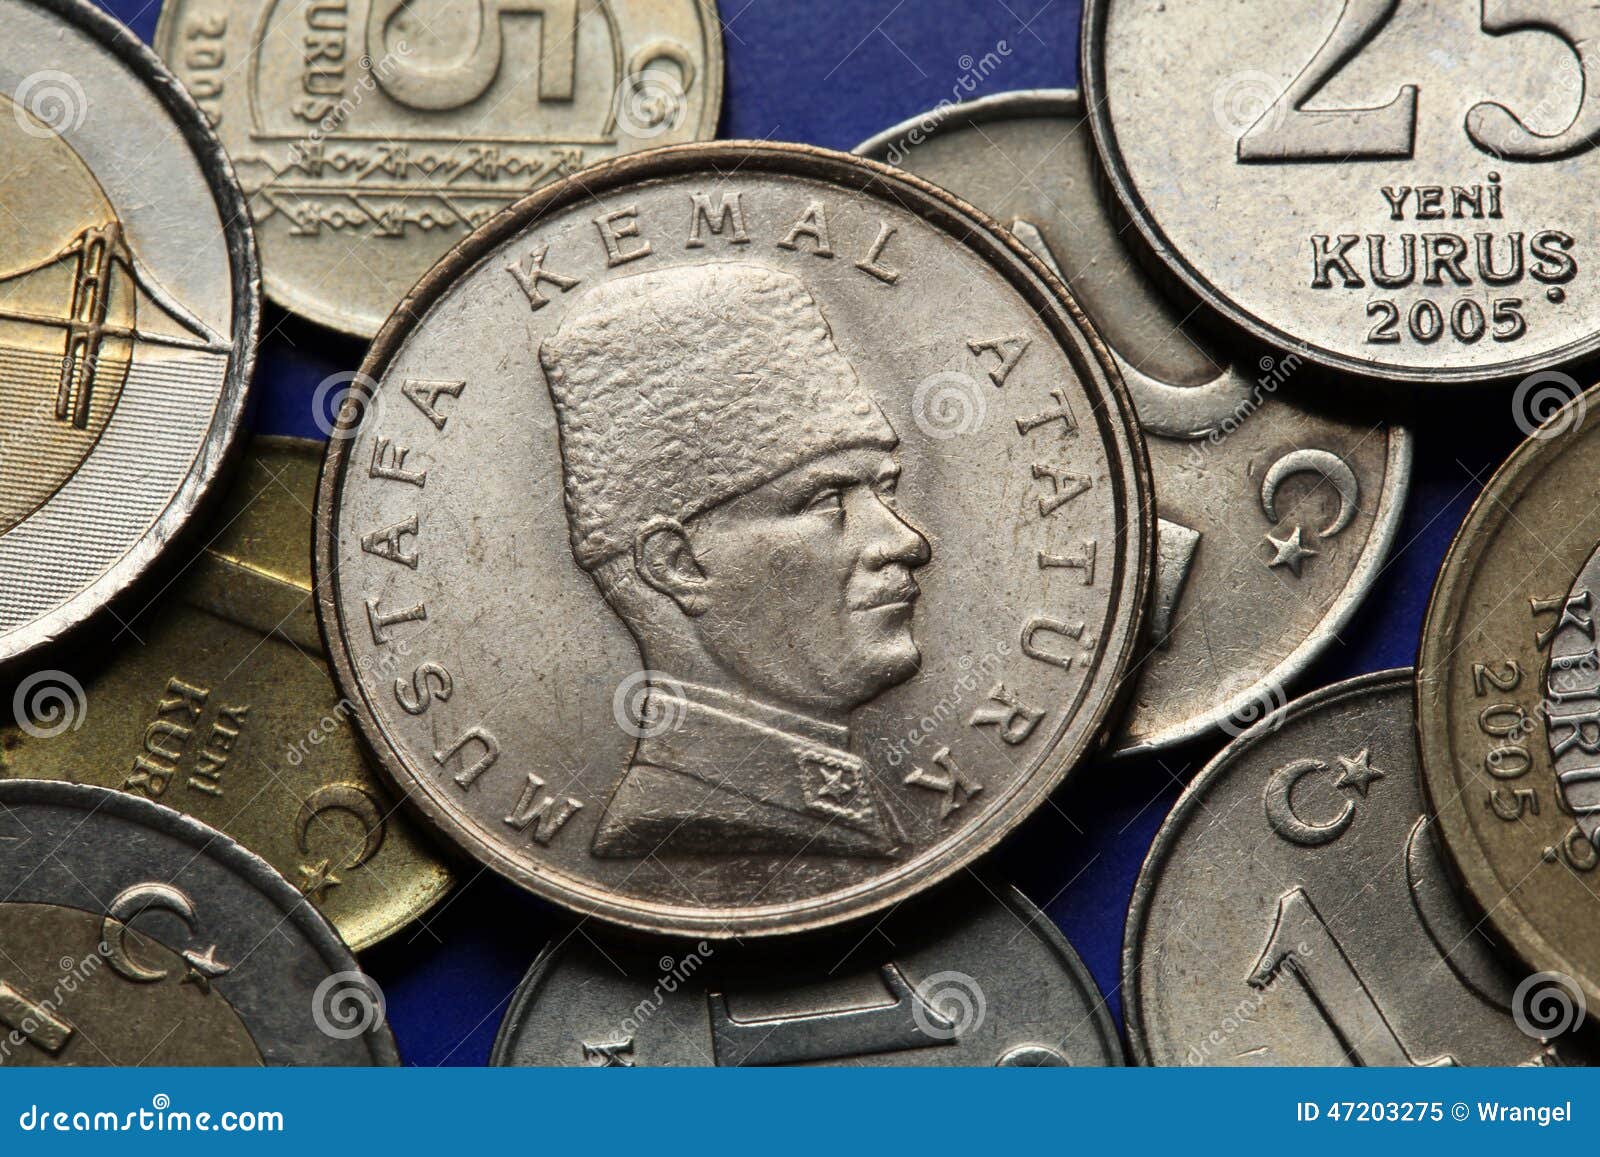 coins of turkey. mustafa kemal ataturk